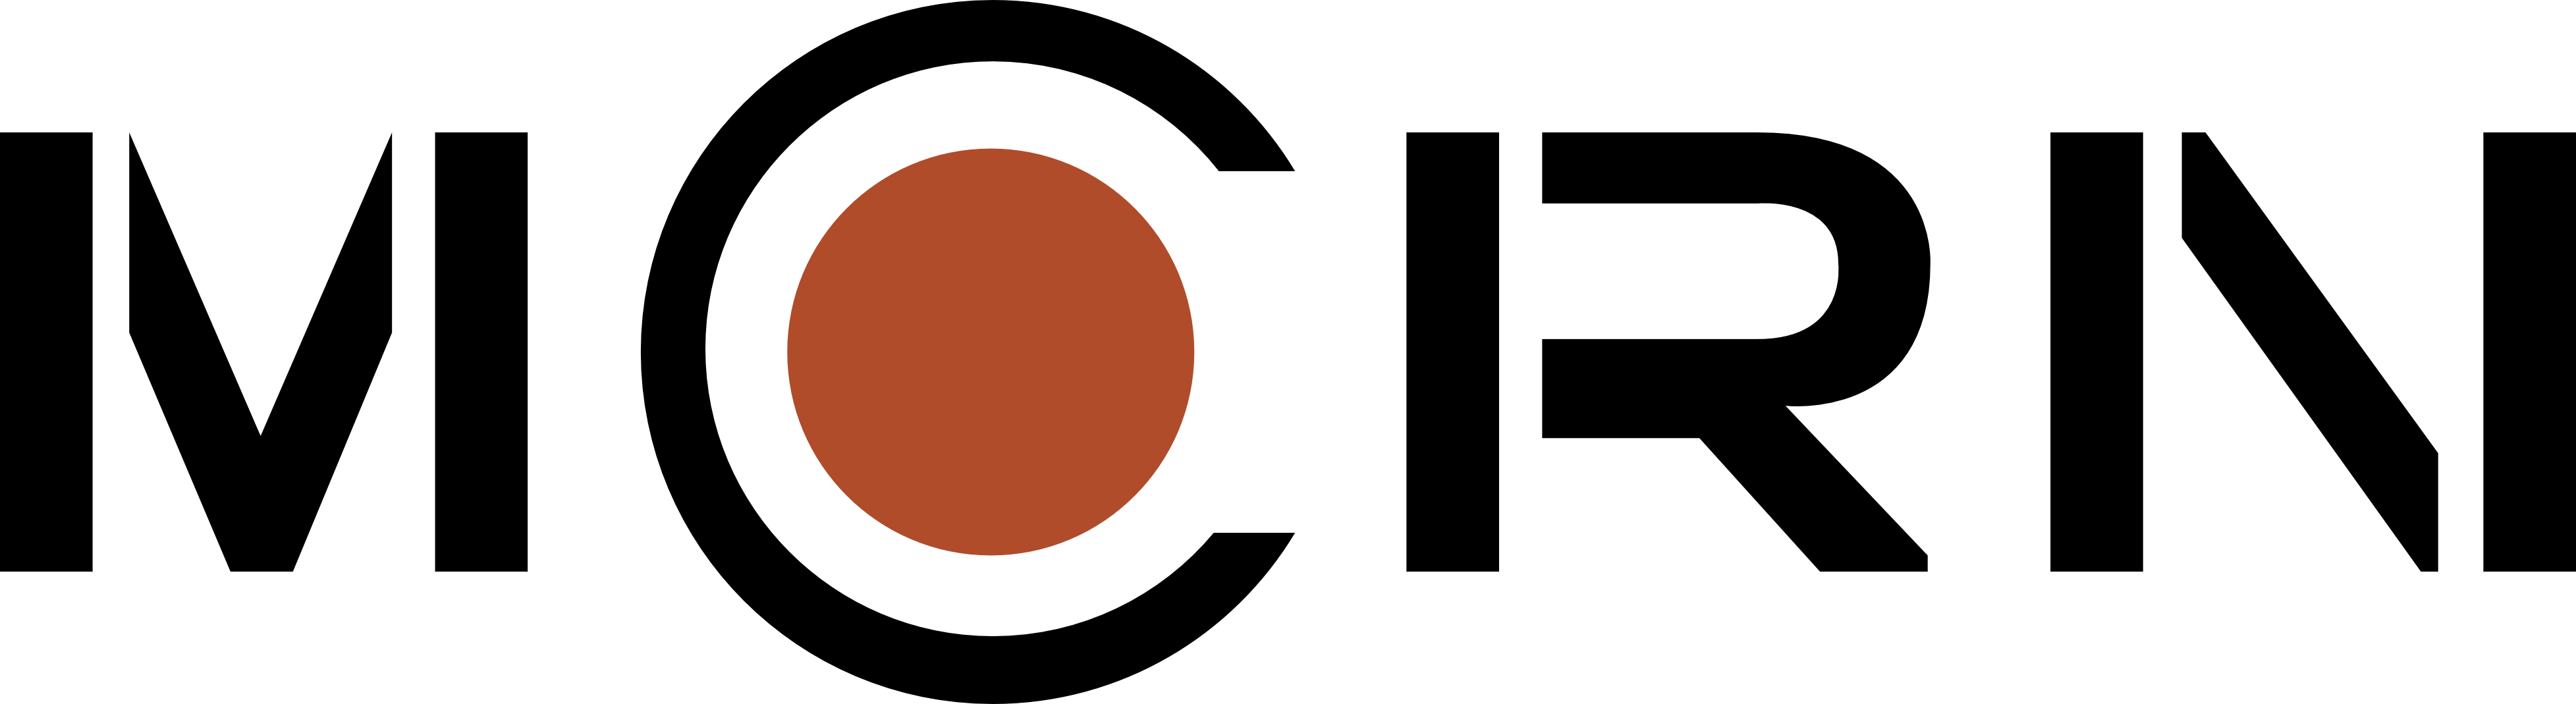 Standard Blackfont, - Mcrn Logo (3911x1069)